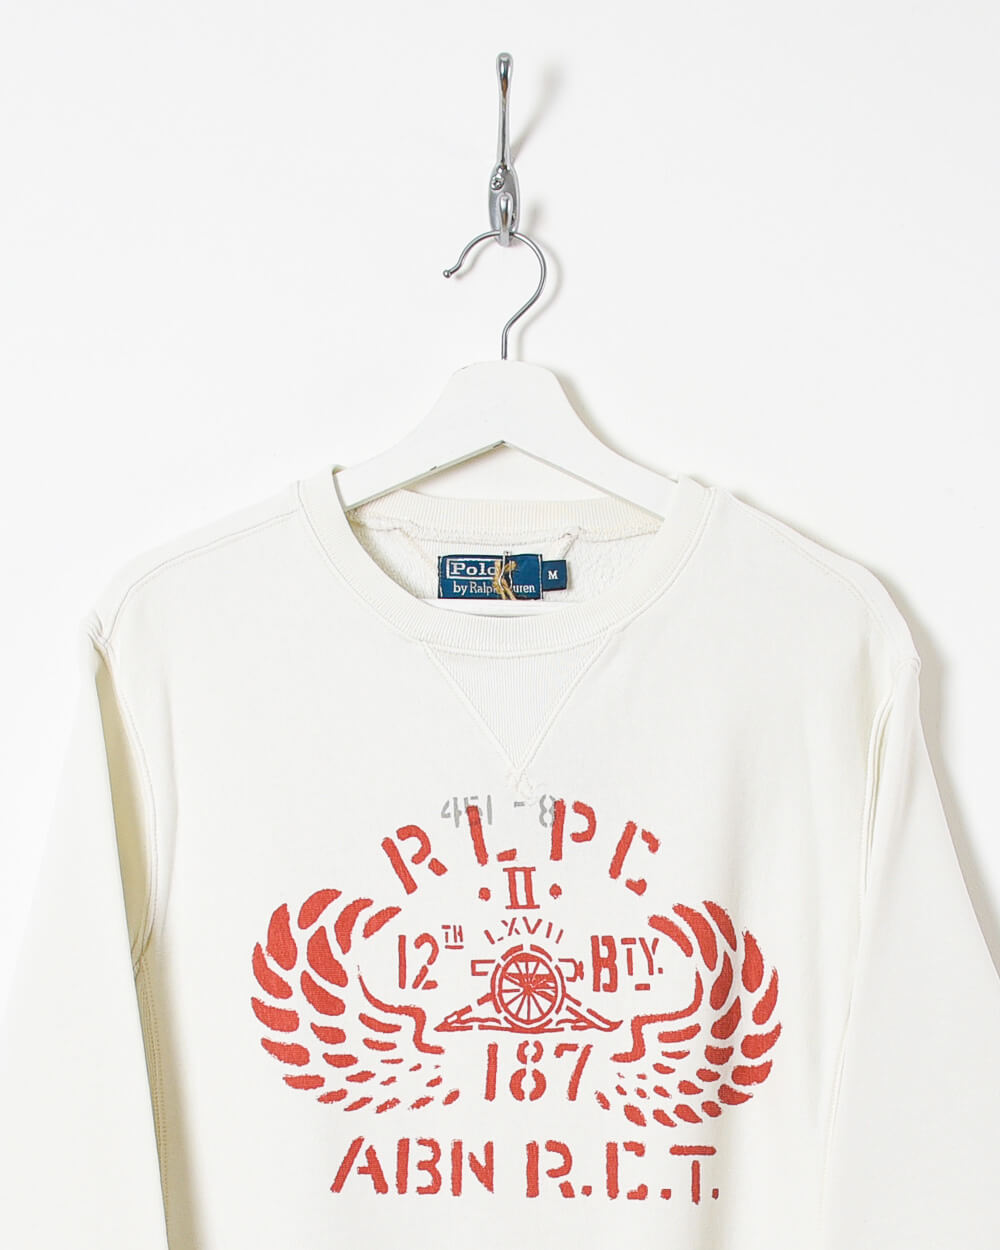 Ralph Lauren Women's ABN R.C.T Sweatshirt - Medium - Domno Vintage 90s, 80s, 00s Retro and Vintage Clothing 